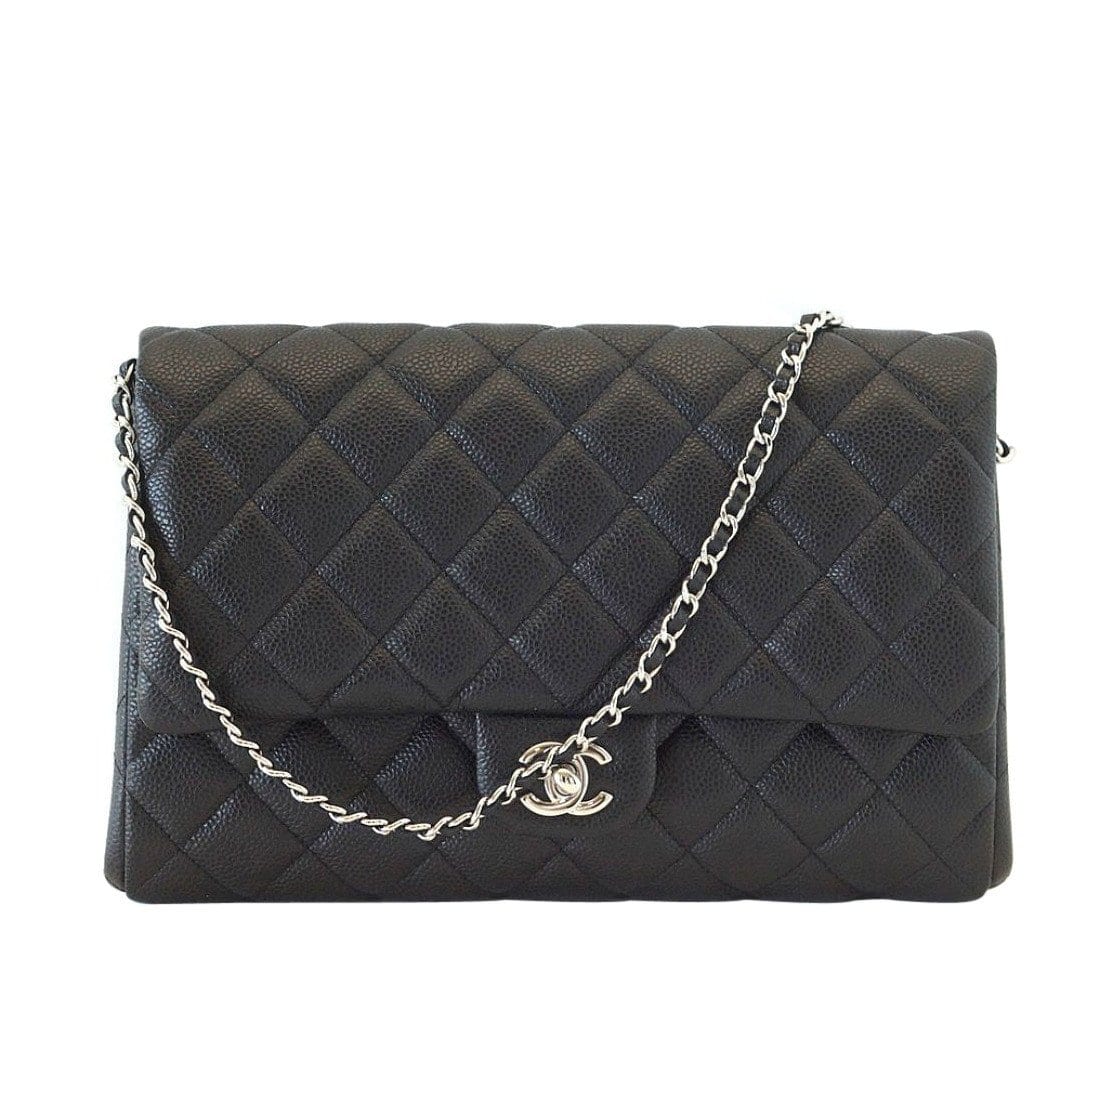 black handbag chanel